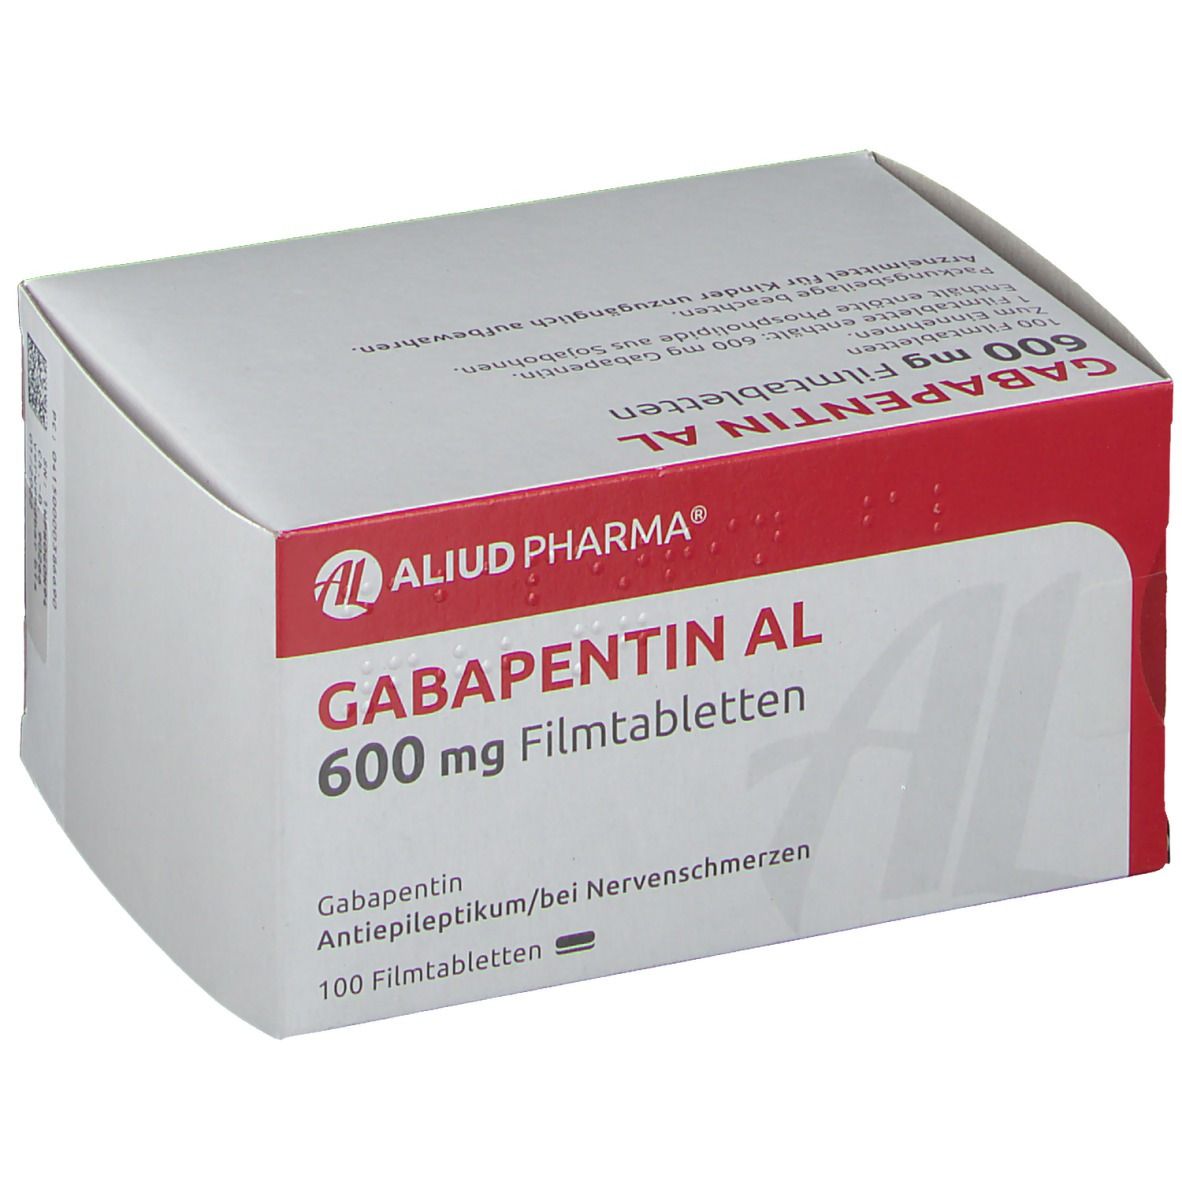 Gabapentin AL 600 mg